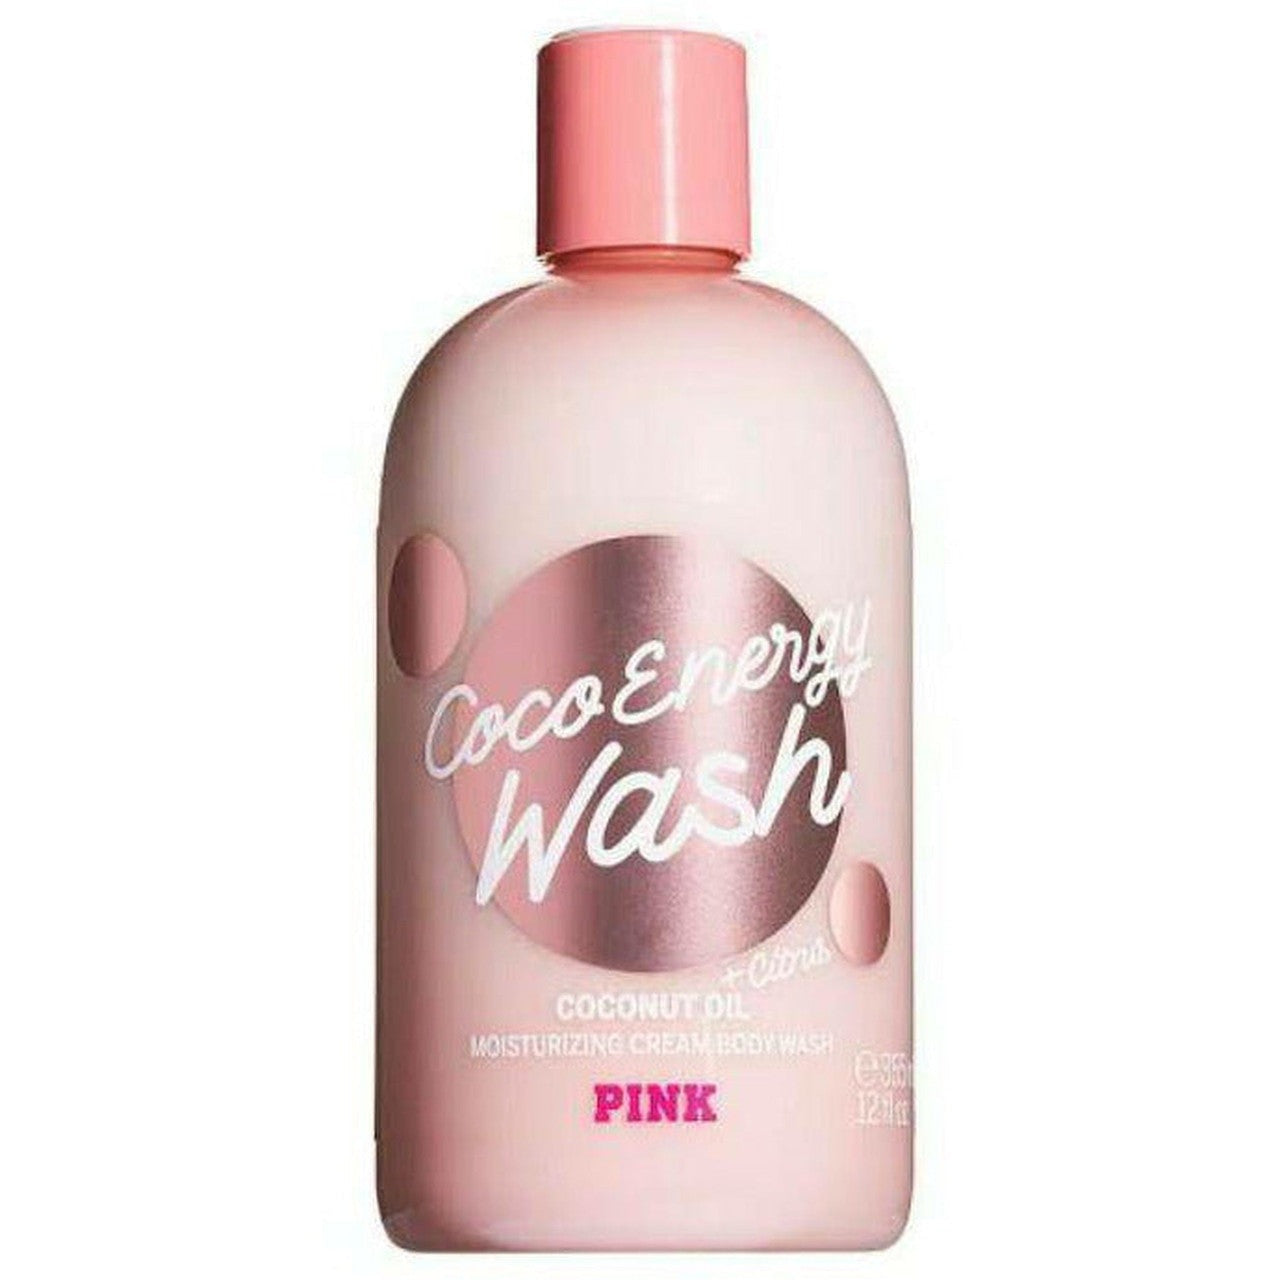 Victoria's Secret Pink Coco Energy Wash + Citrus Cream Body Wash 355ml